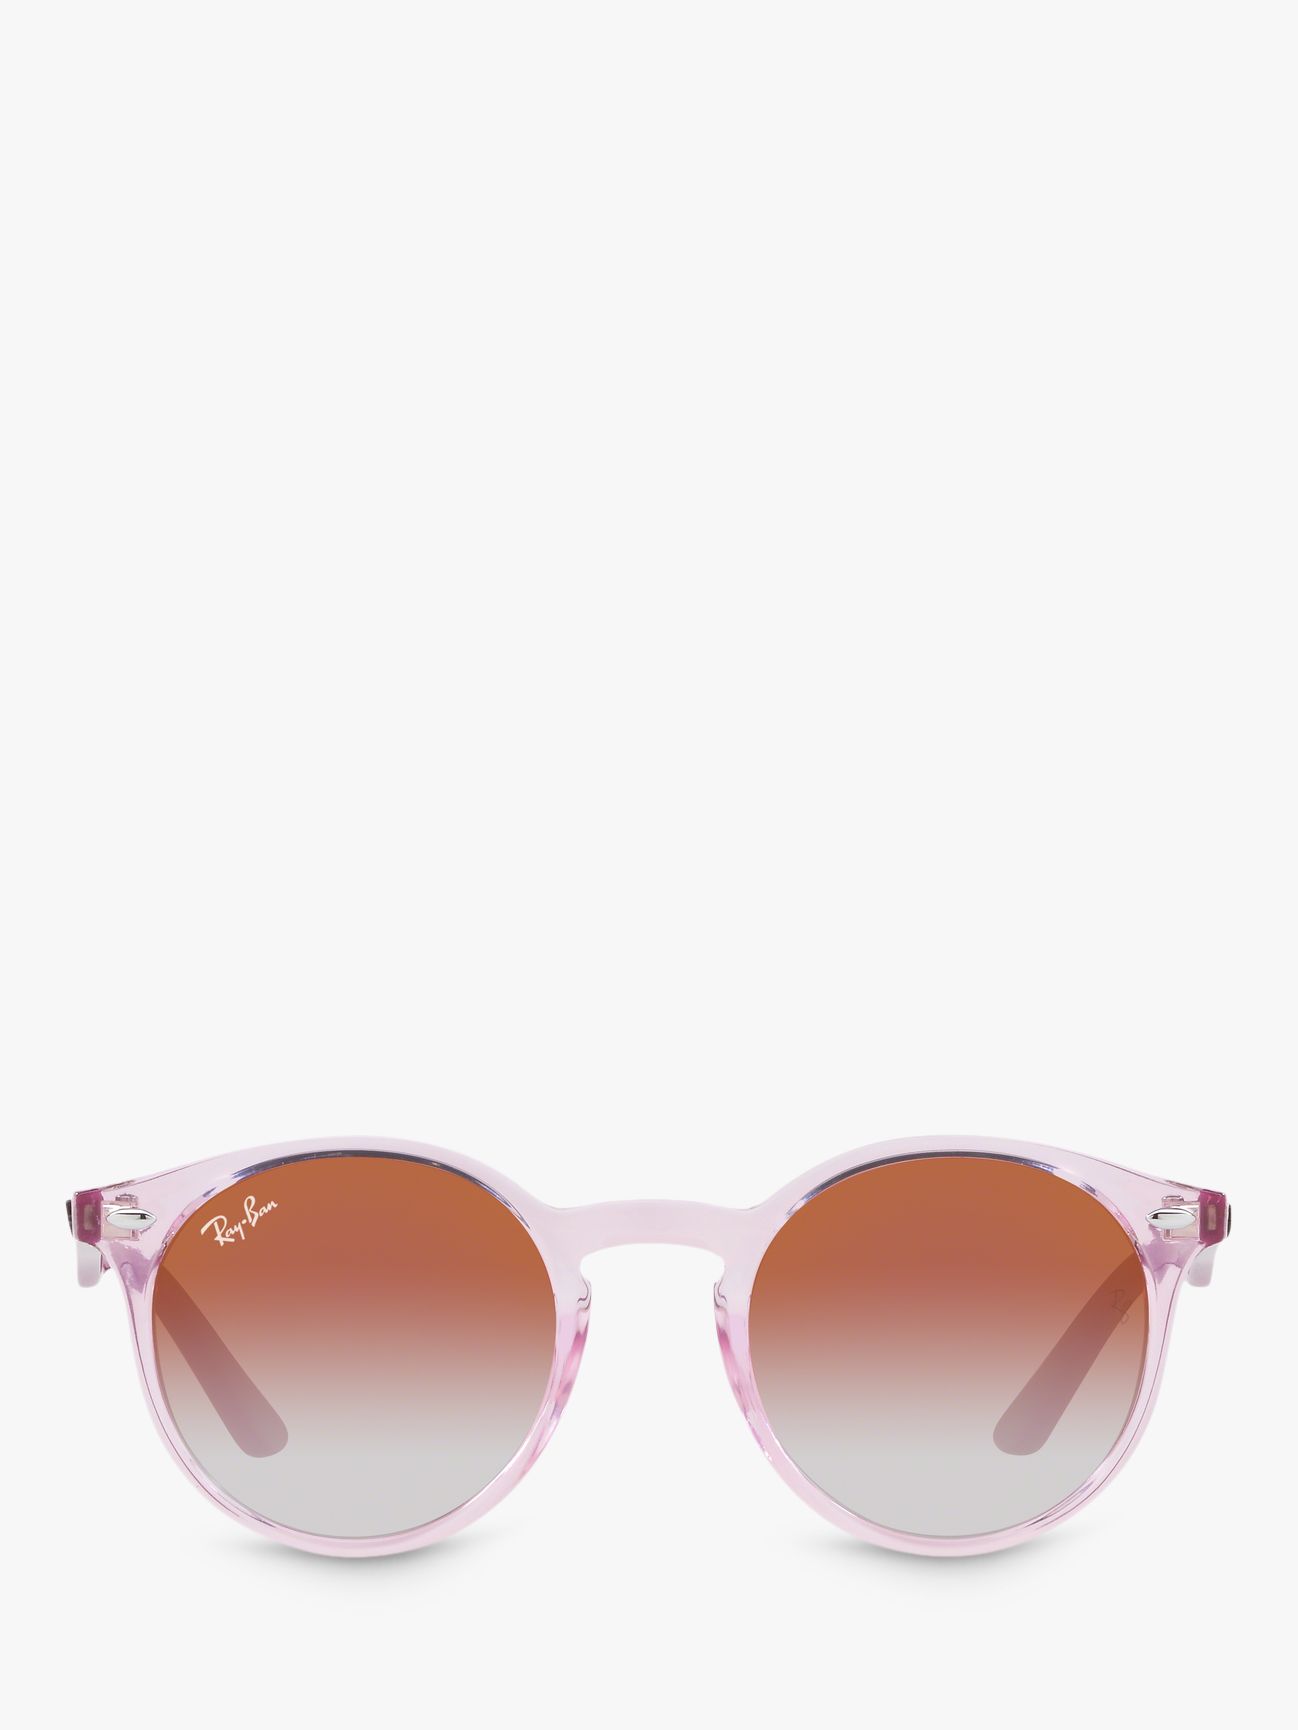 Ray-Ban Junior RJ9064S Round Sunglasses, Light Pink/Red Gradient